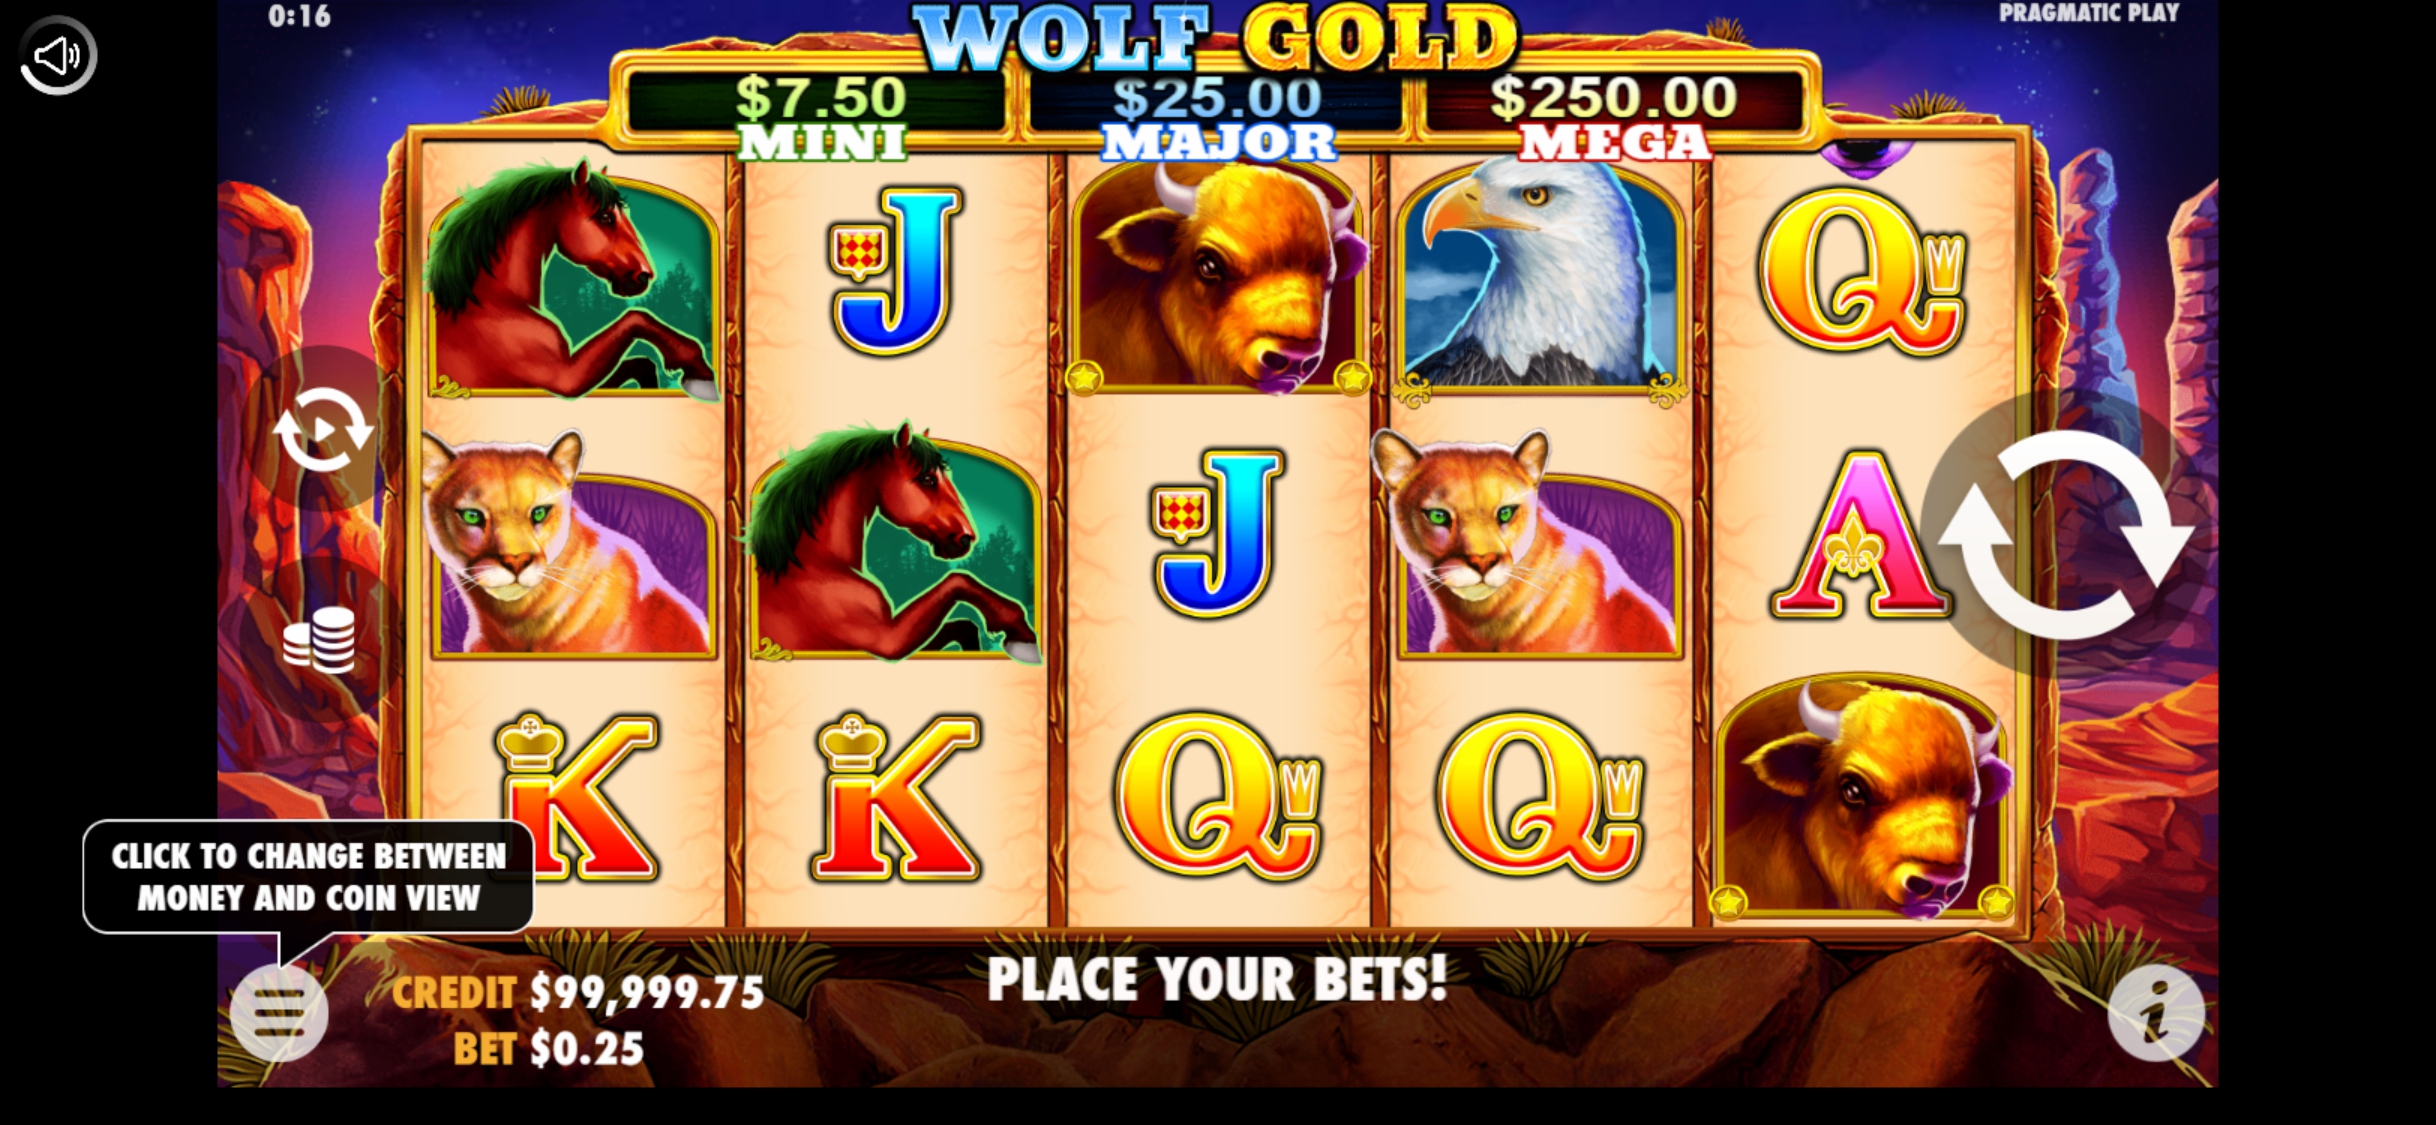 Mozzart Casino Mobile Slot Games Review